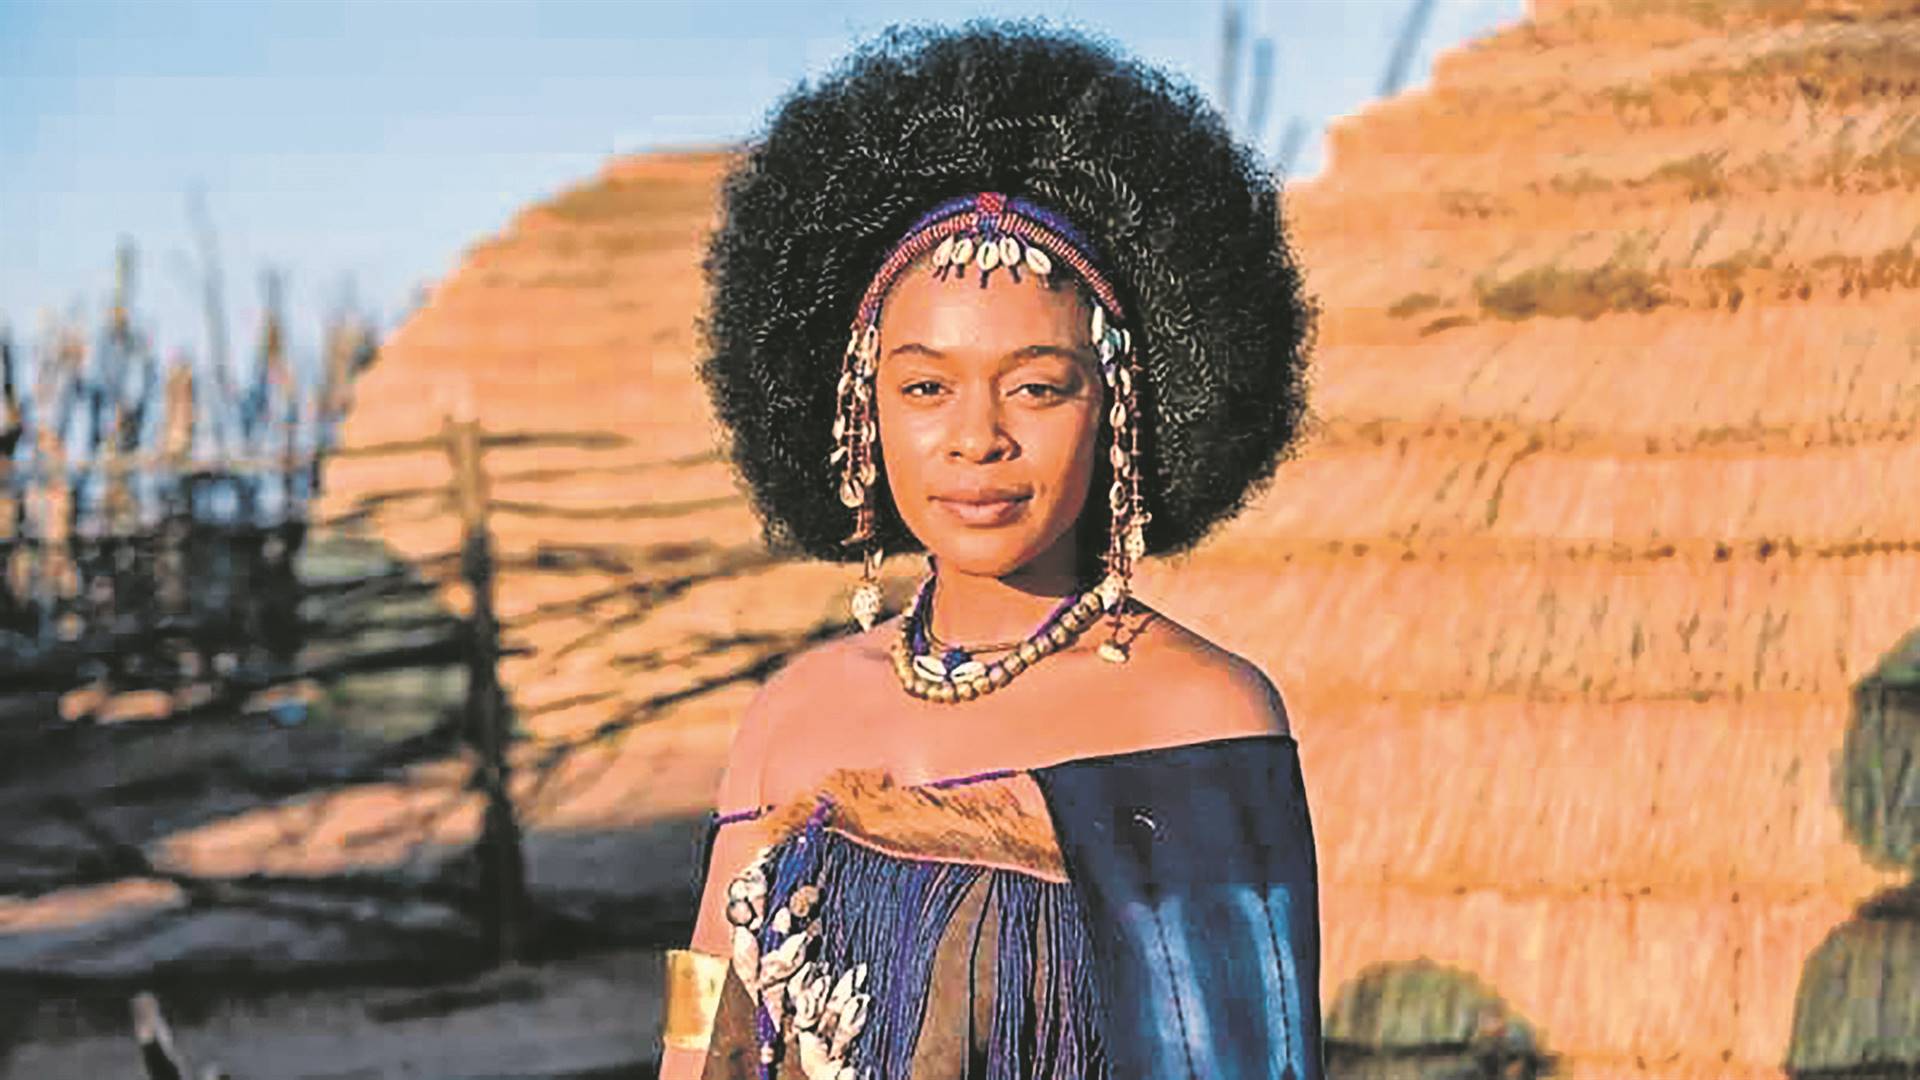 Internationally acclaimed actress Nomzamo Mbatha plays a lead role on Shaka: Ilembe.